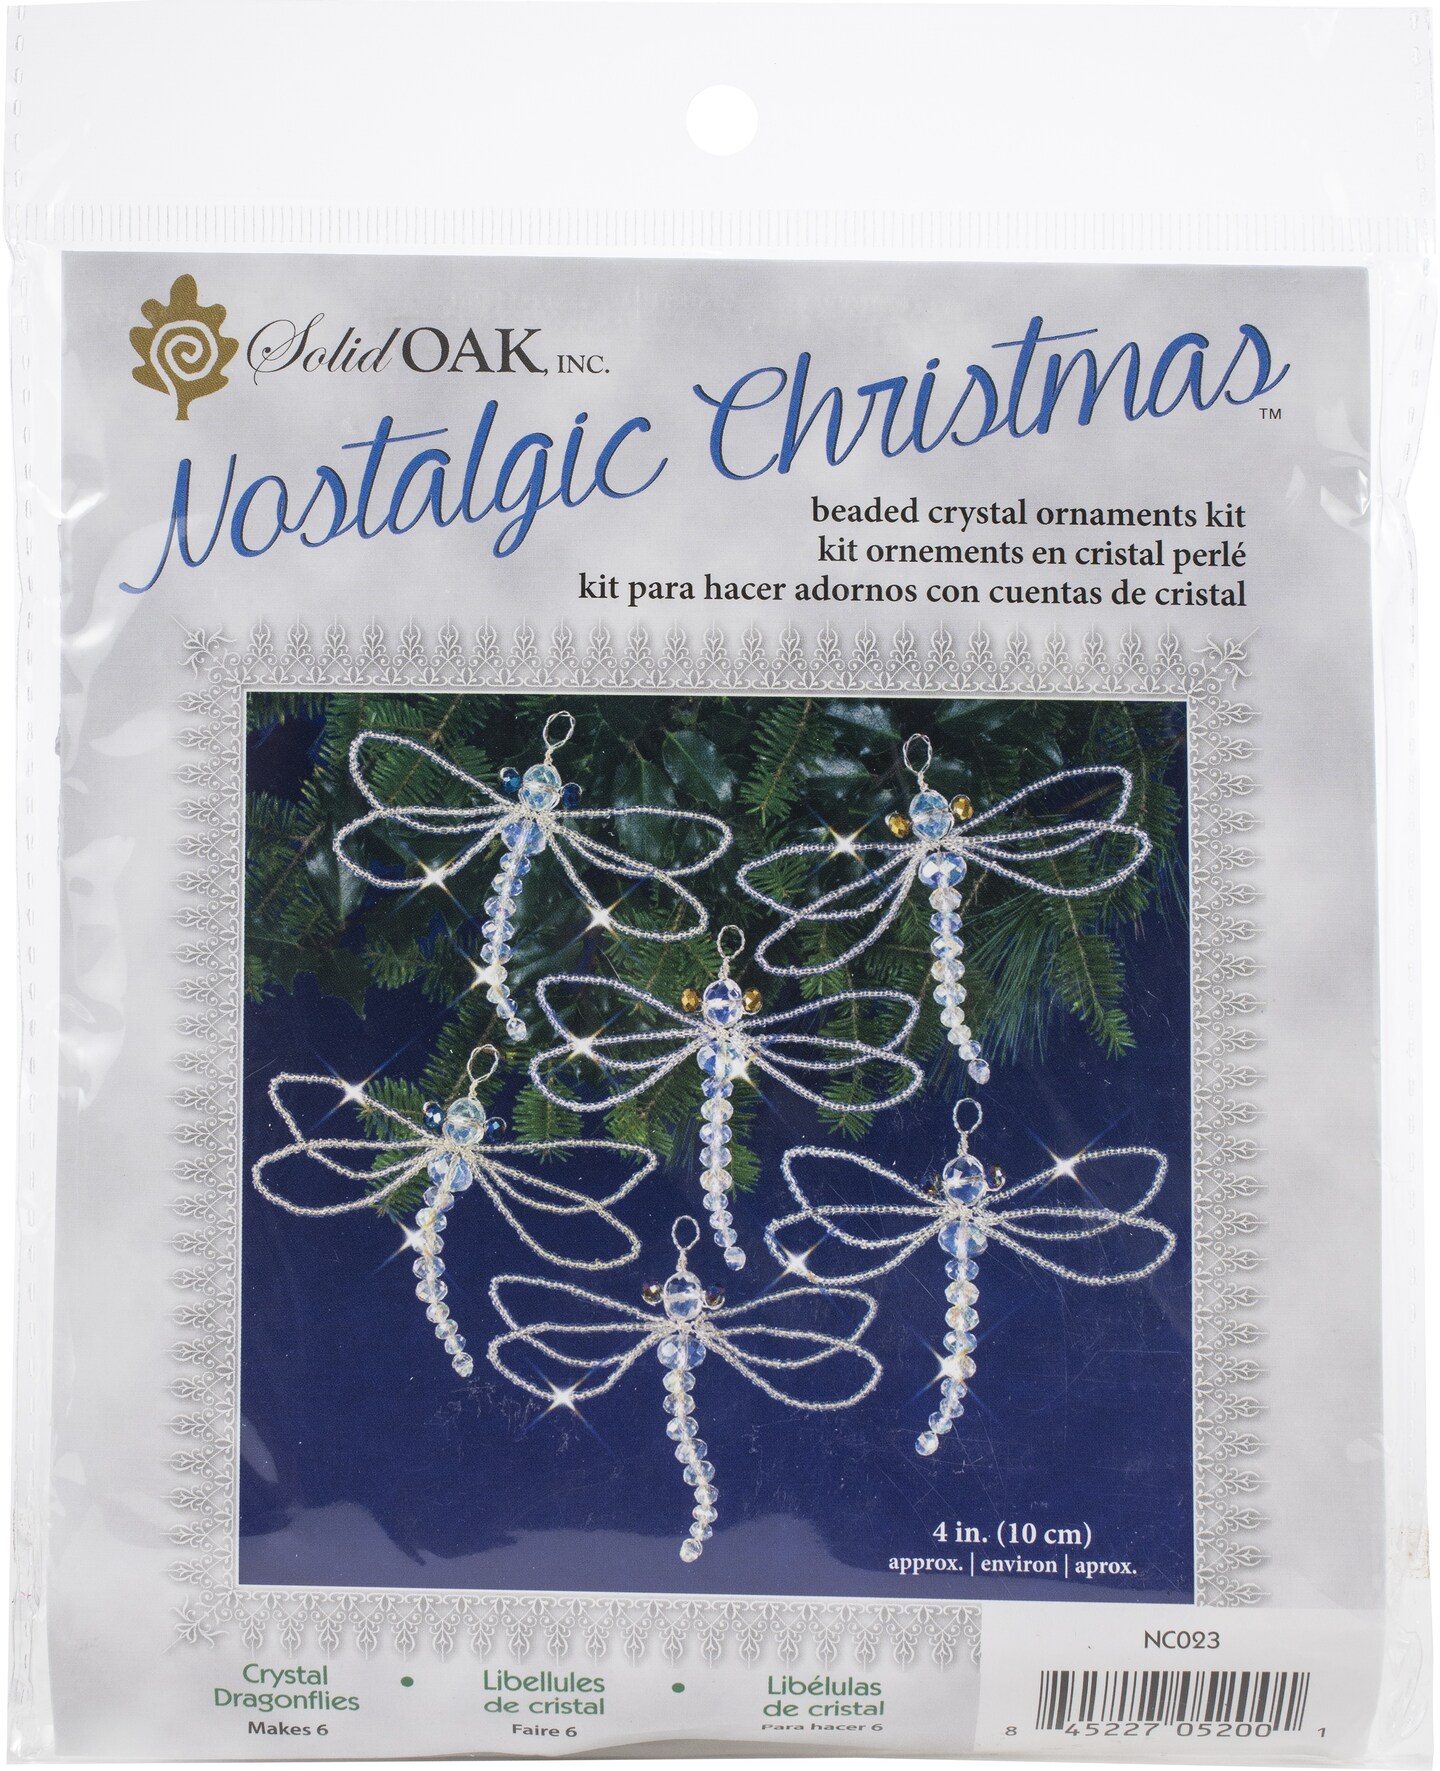 Solid Oak Nostalgic Christmas Beaded Crystal Ornament Kit-Crystal Dragonflies